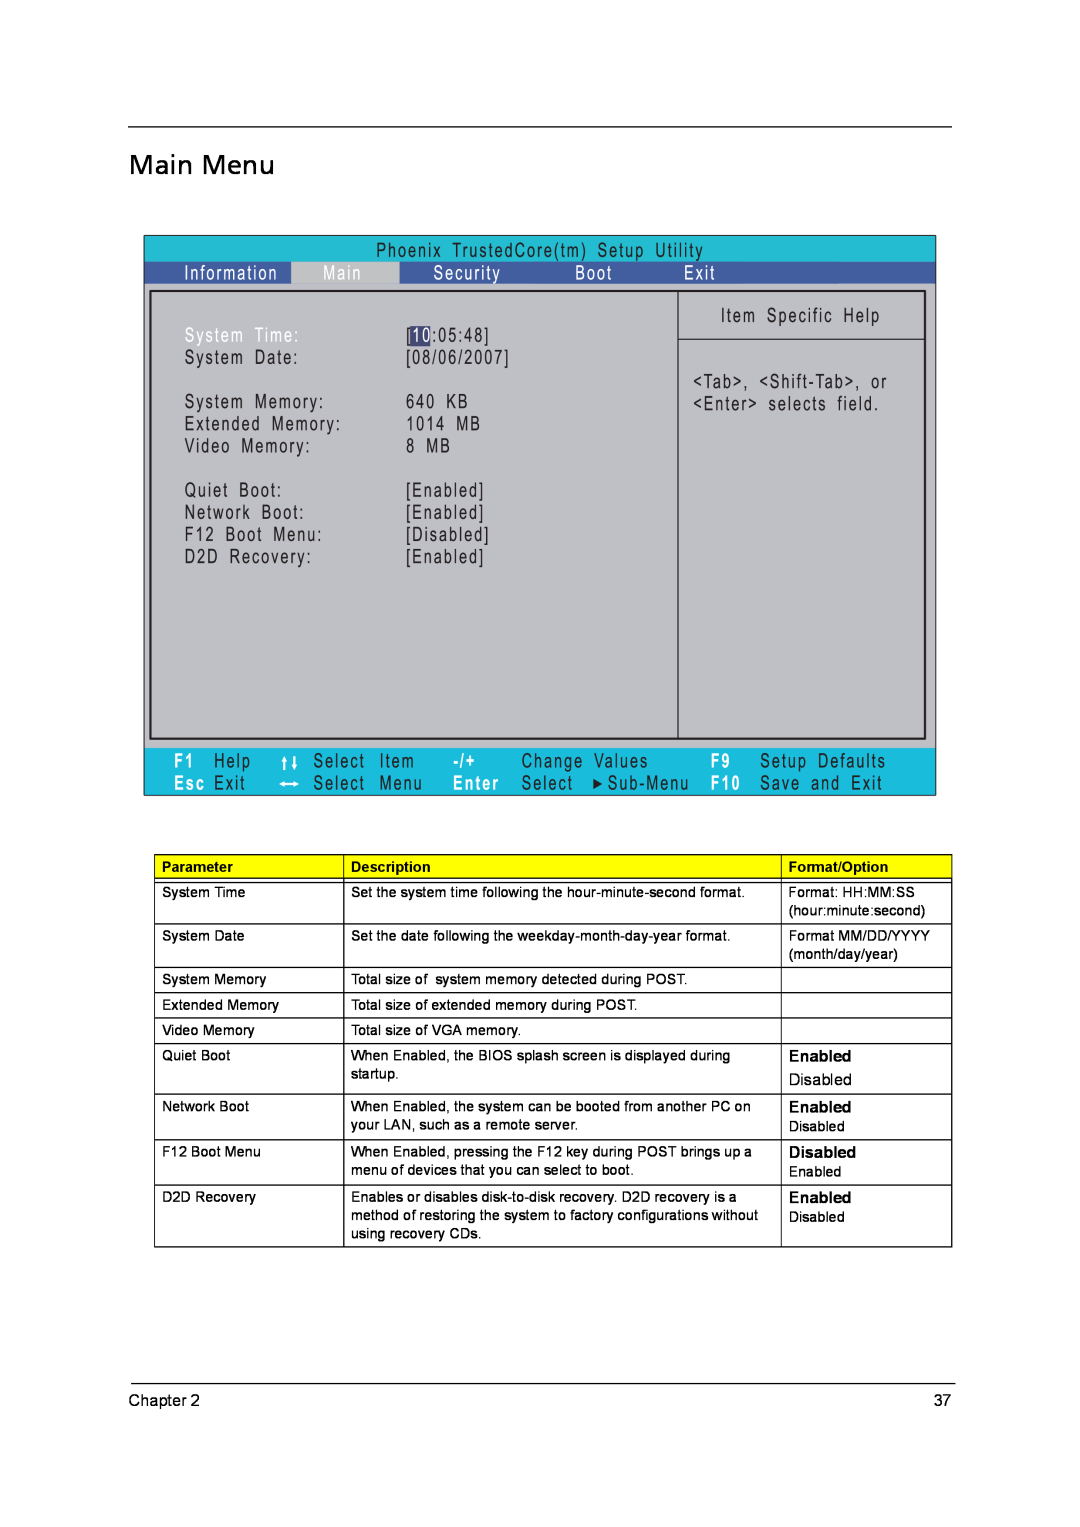 Acer 4315 manual Main Menu, Enabled, Disabled, Parameter, Description, Format/Option 